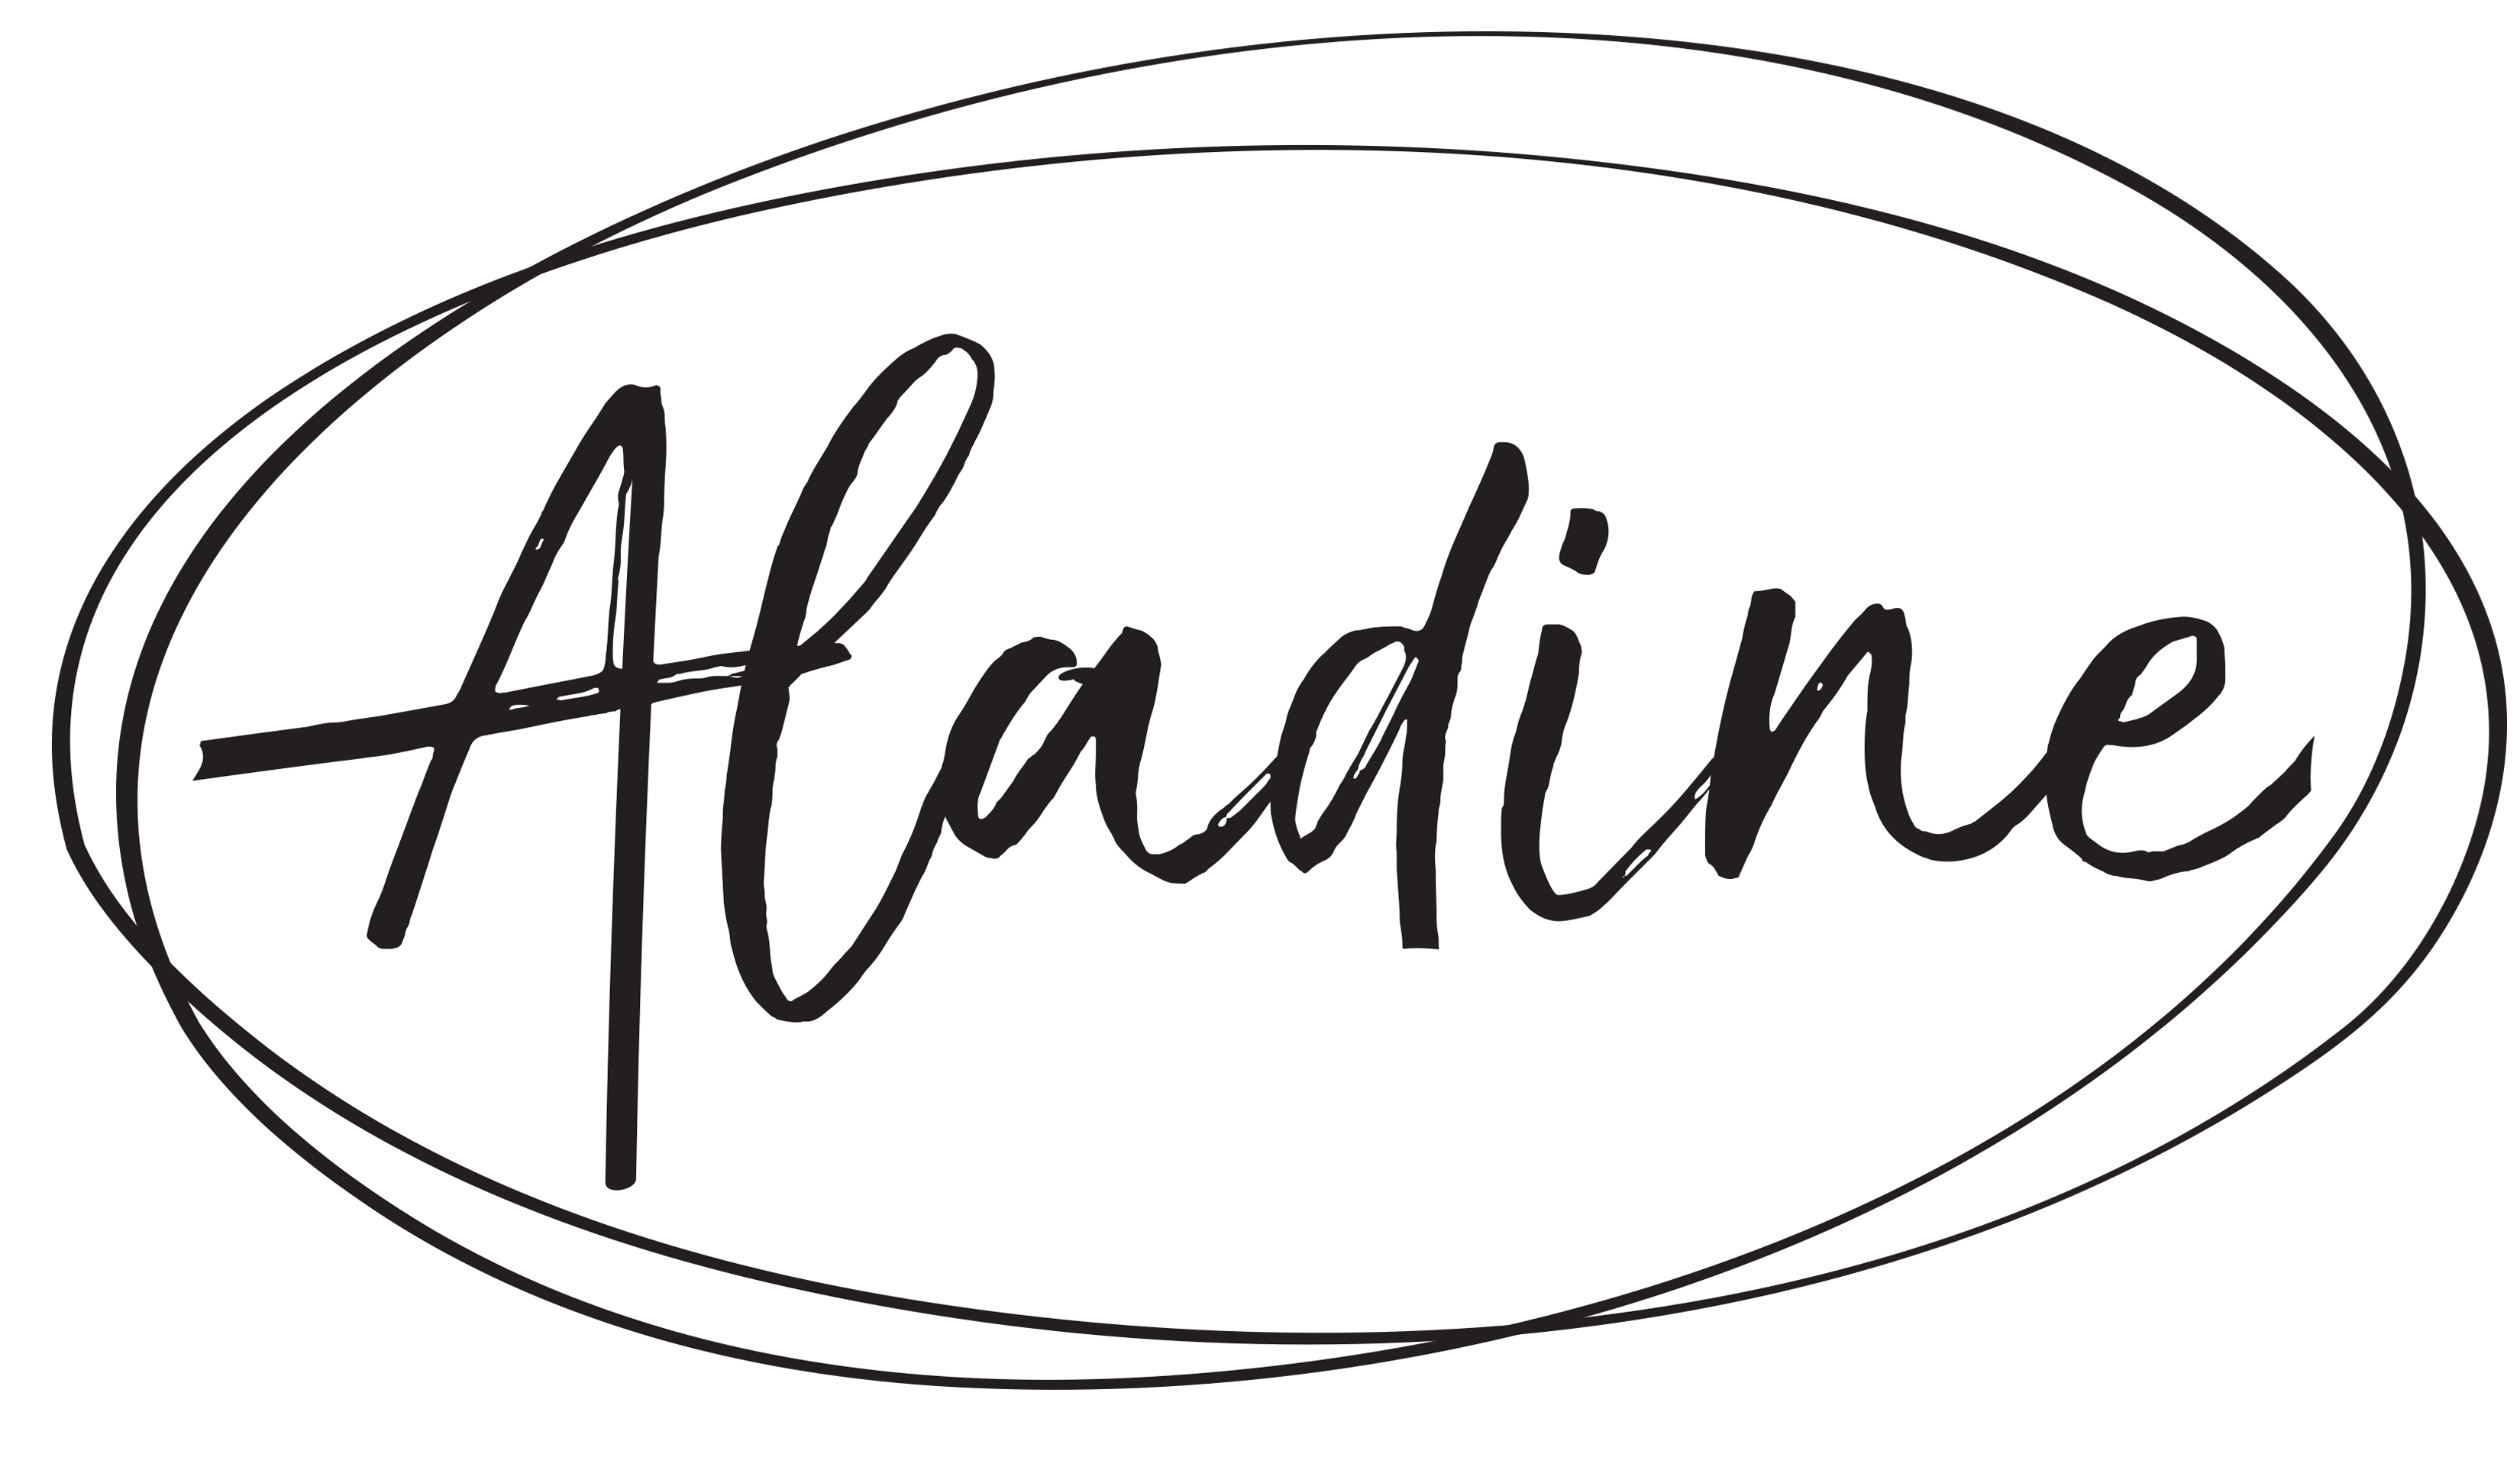 Image result for Aladine stampo logo